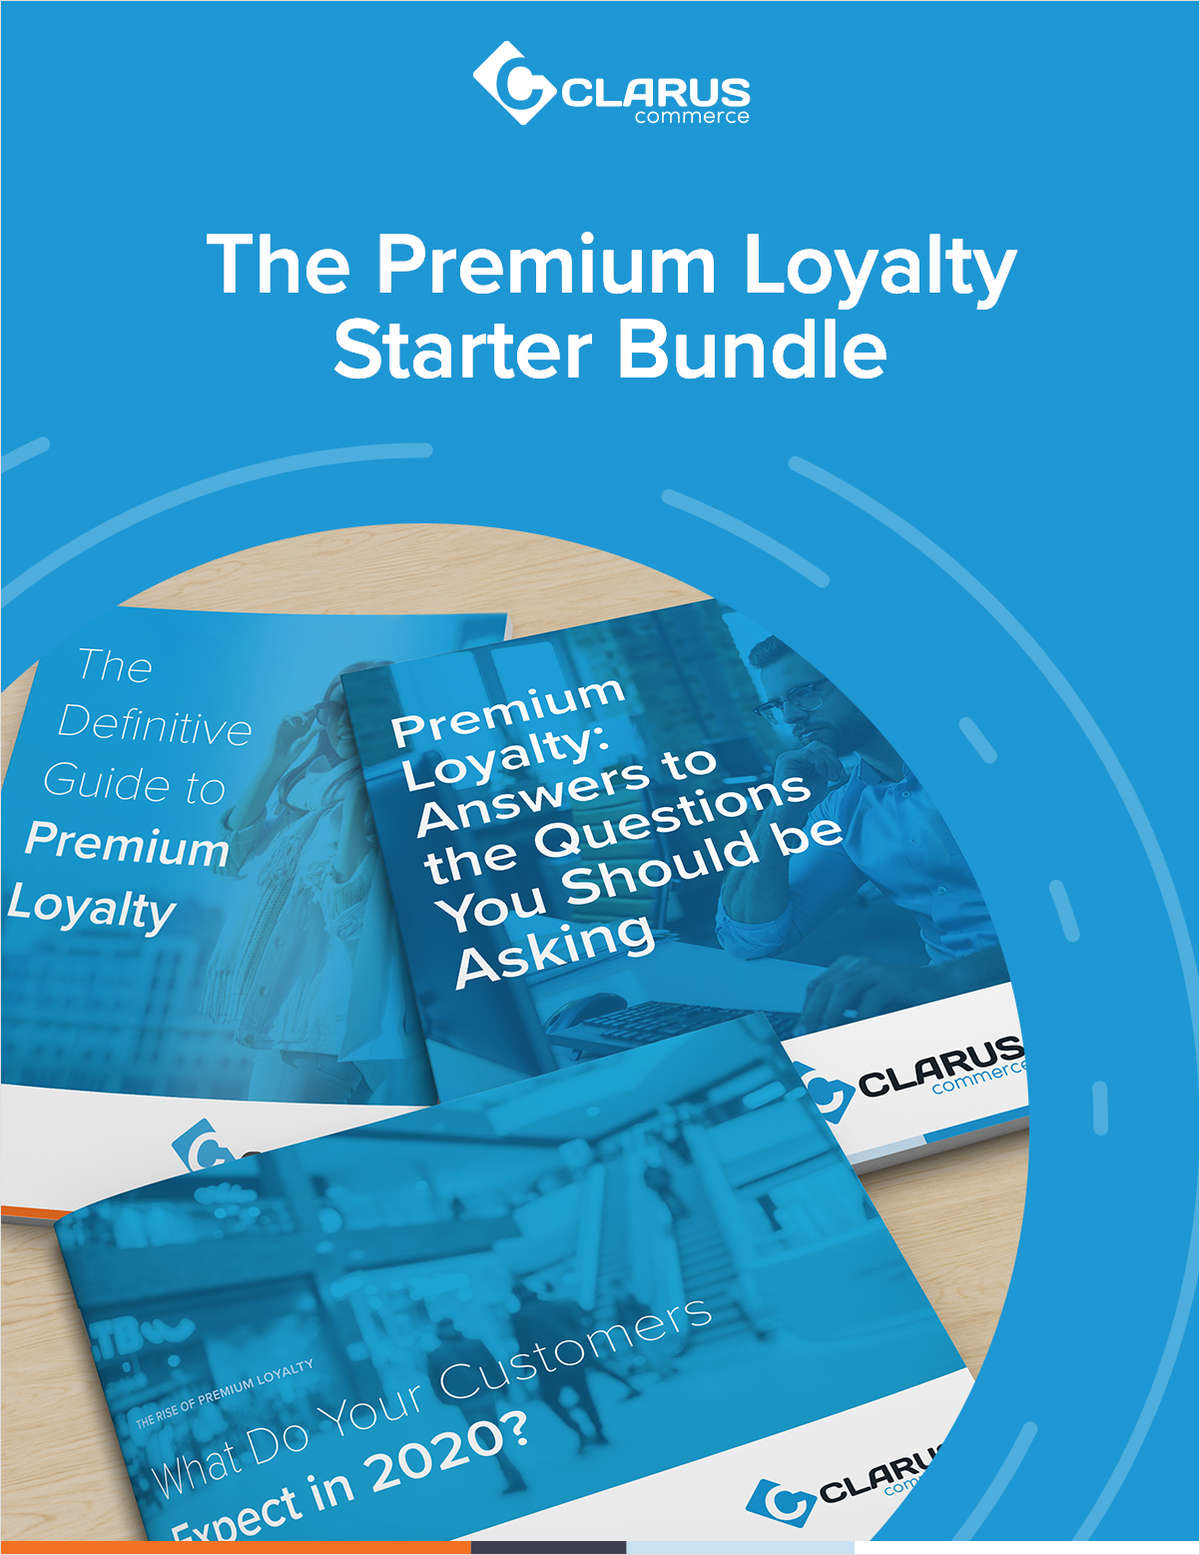 The Premium Loyalty Starter Bundle